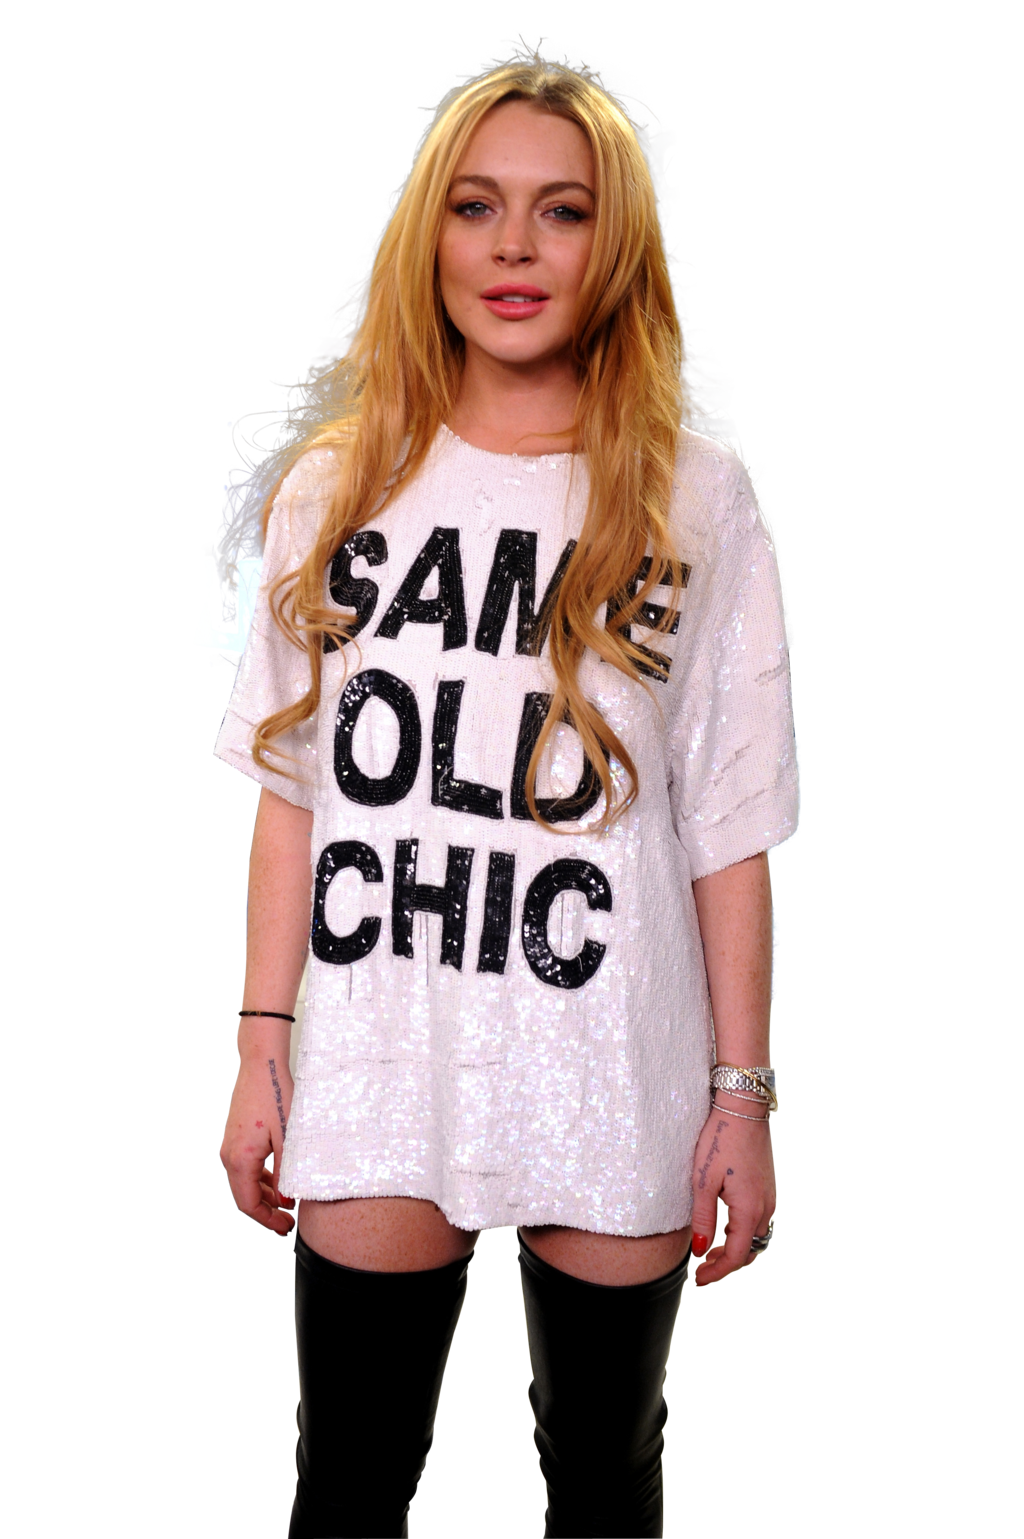 Lindsay Lohan by ultimatepsds